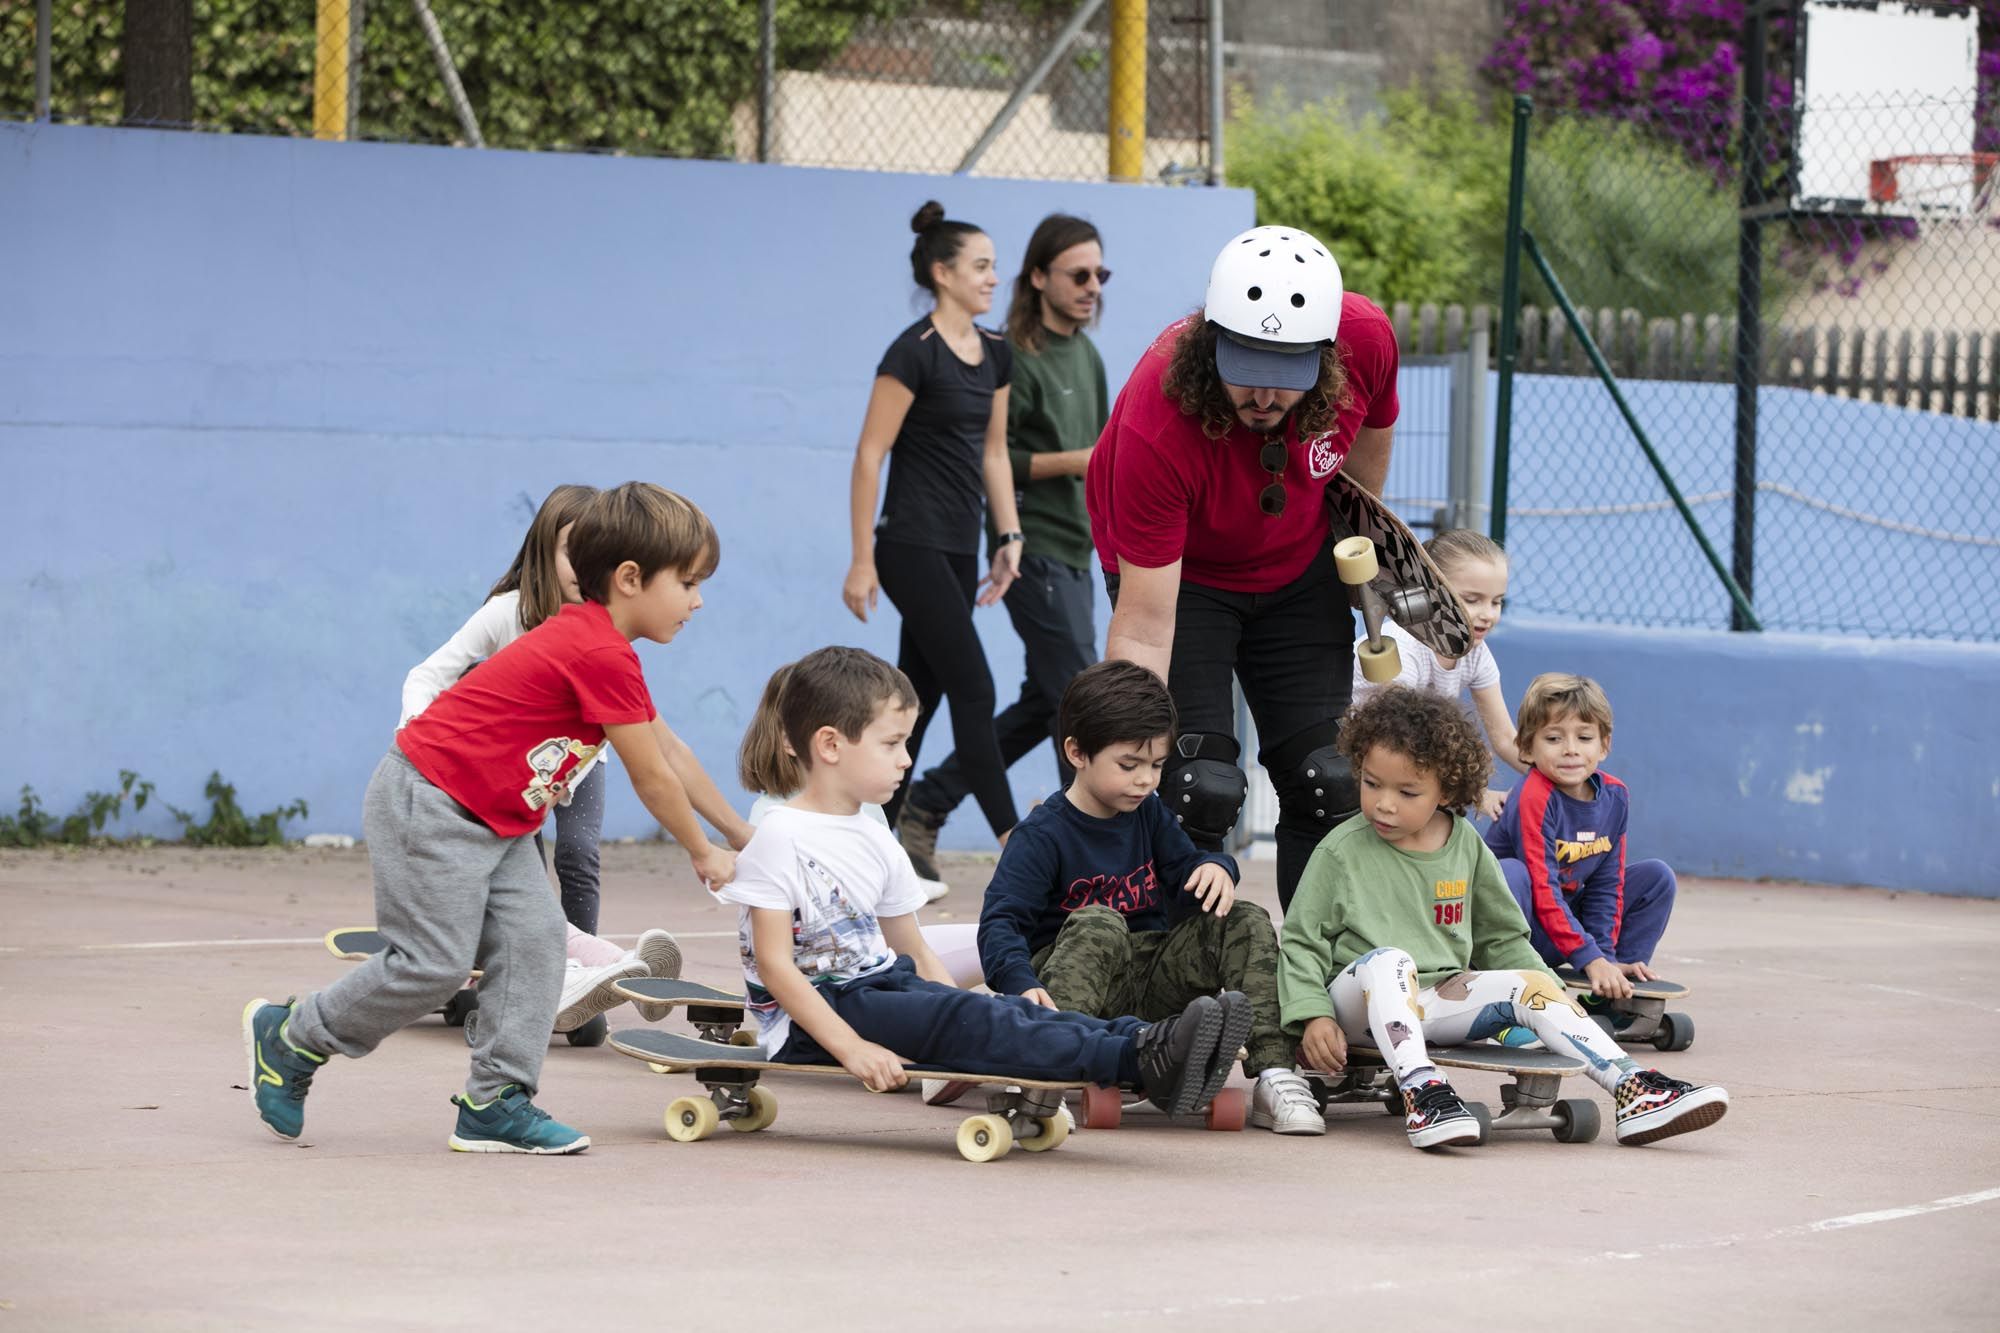 'Surfskate': deporte inclusivo en Ibiza